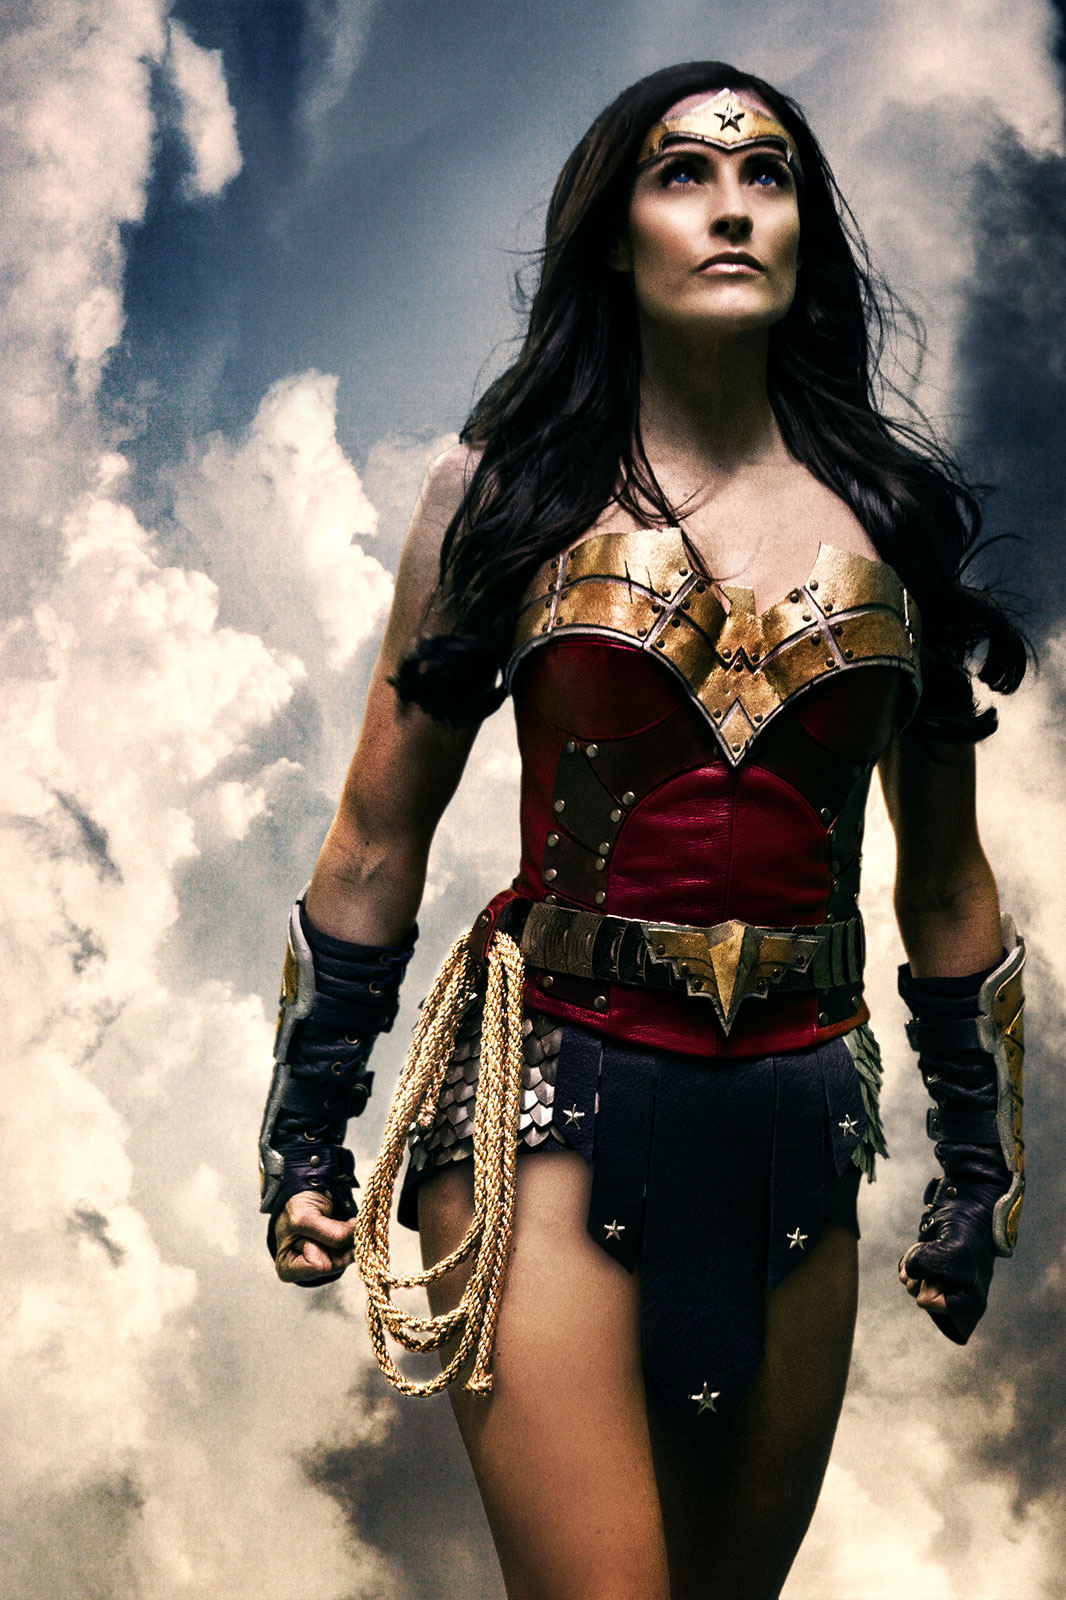 Rainfall Films On How To Make A Brilliant Wonder Woman Film - NerdSpan